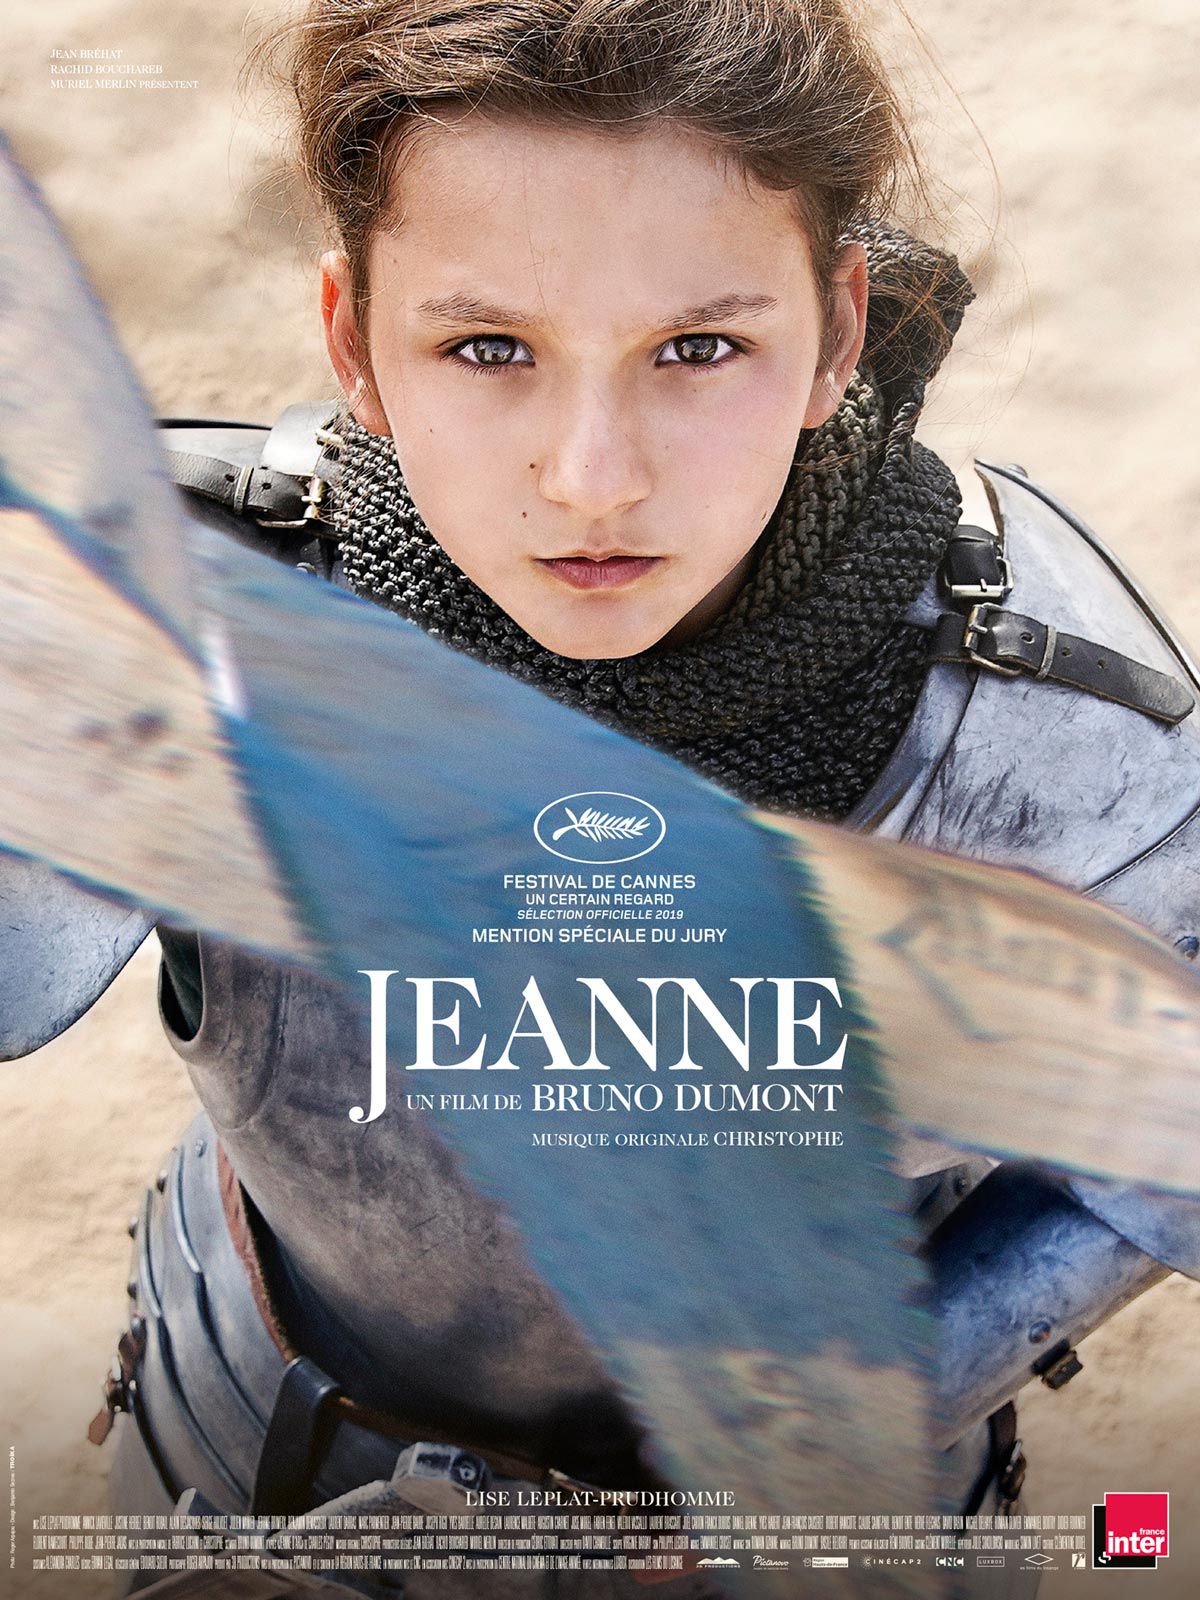 Jeanne - Film (2019) streaming VF gratuit complet